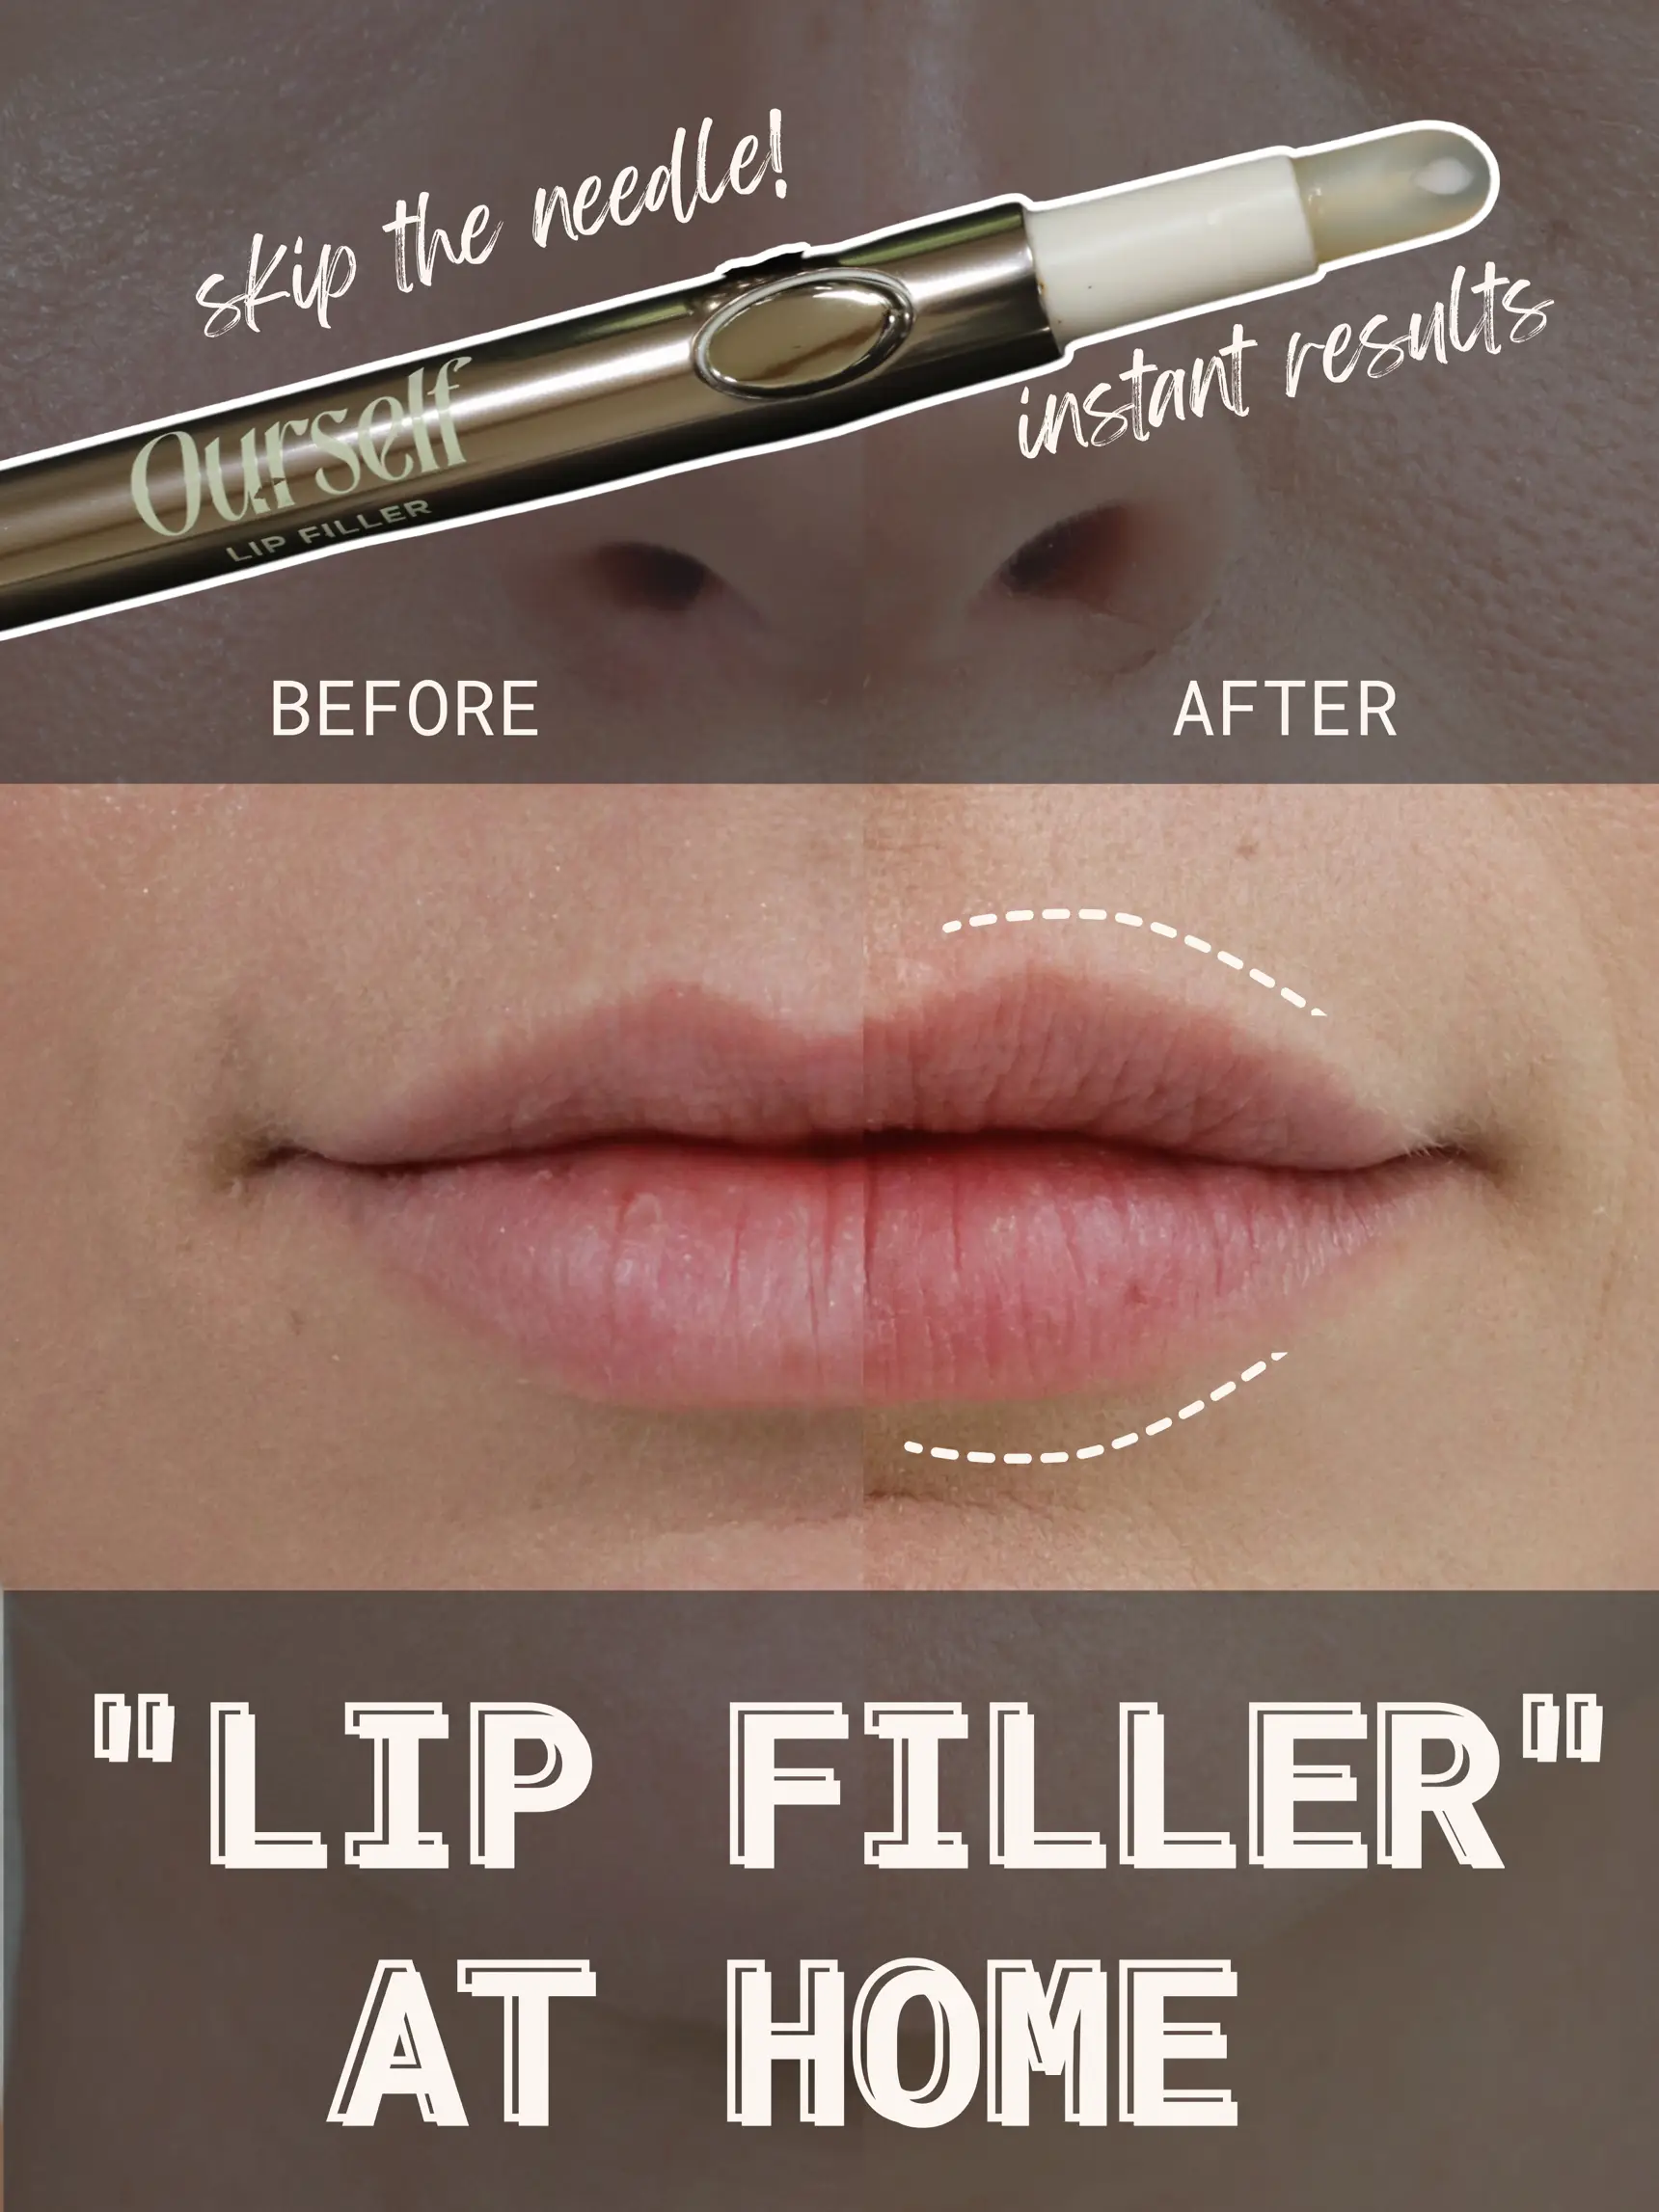 $145 subtopical lip filler!? …worth it?